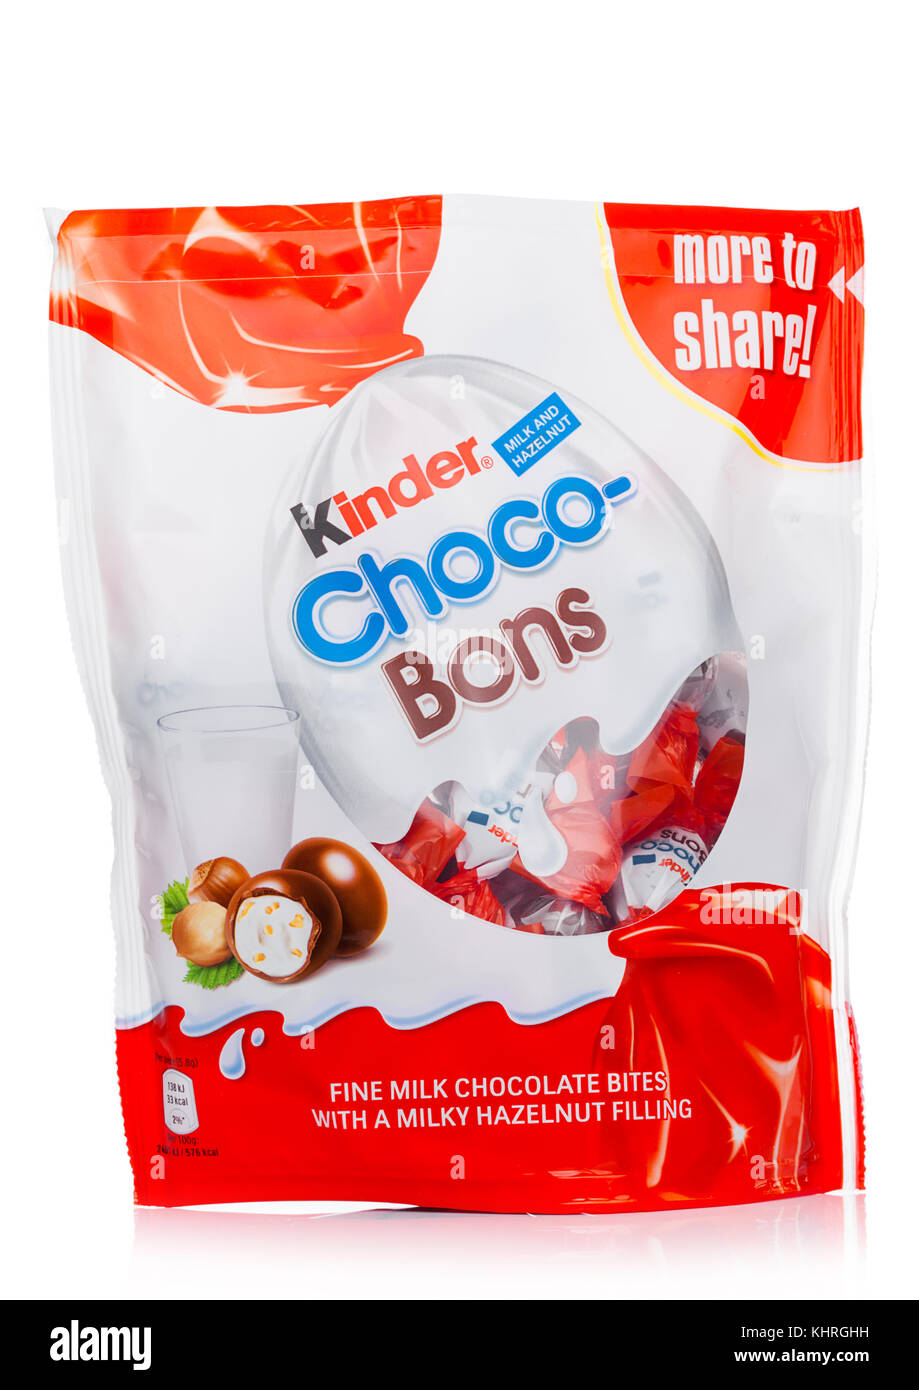 Global Food News on X: Kinder Cards Schoko-Bons Crispy Hybrid